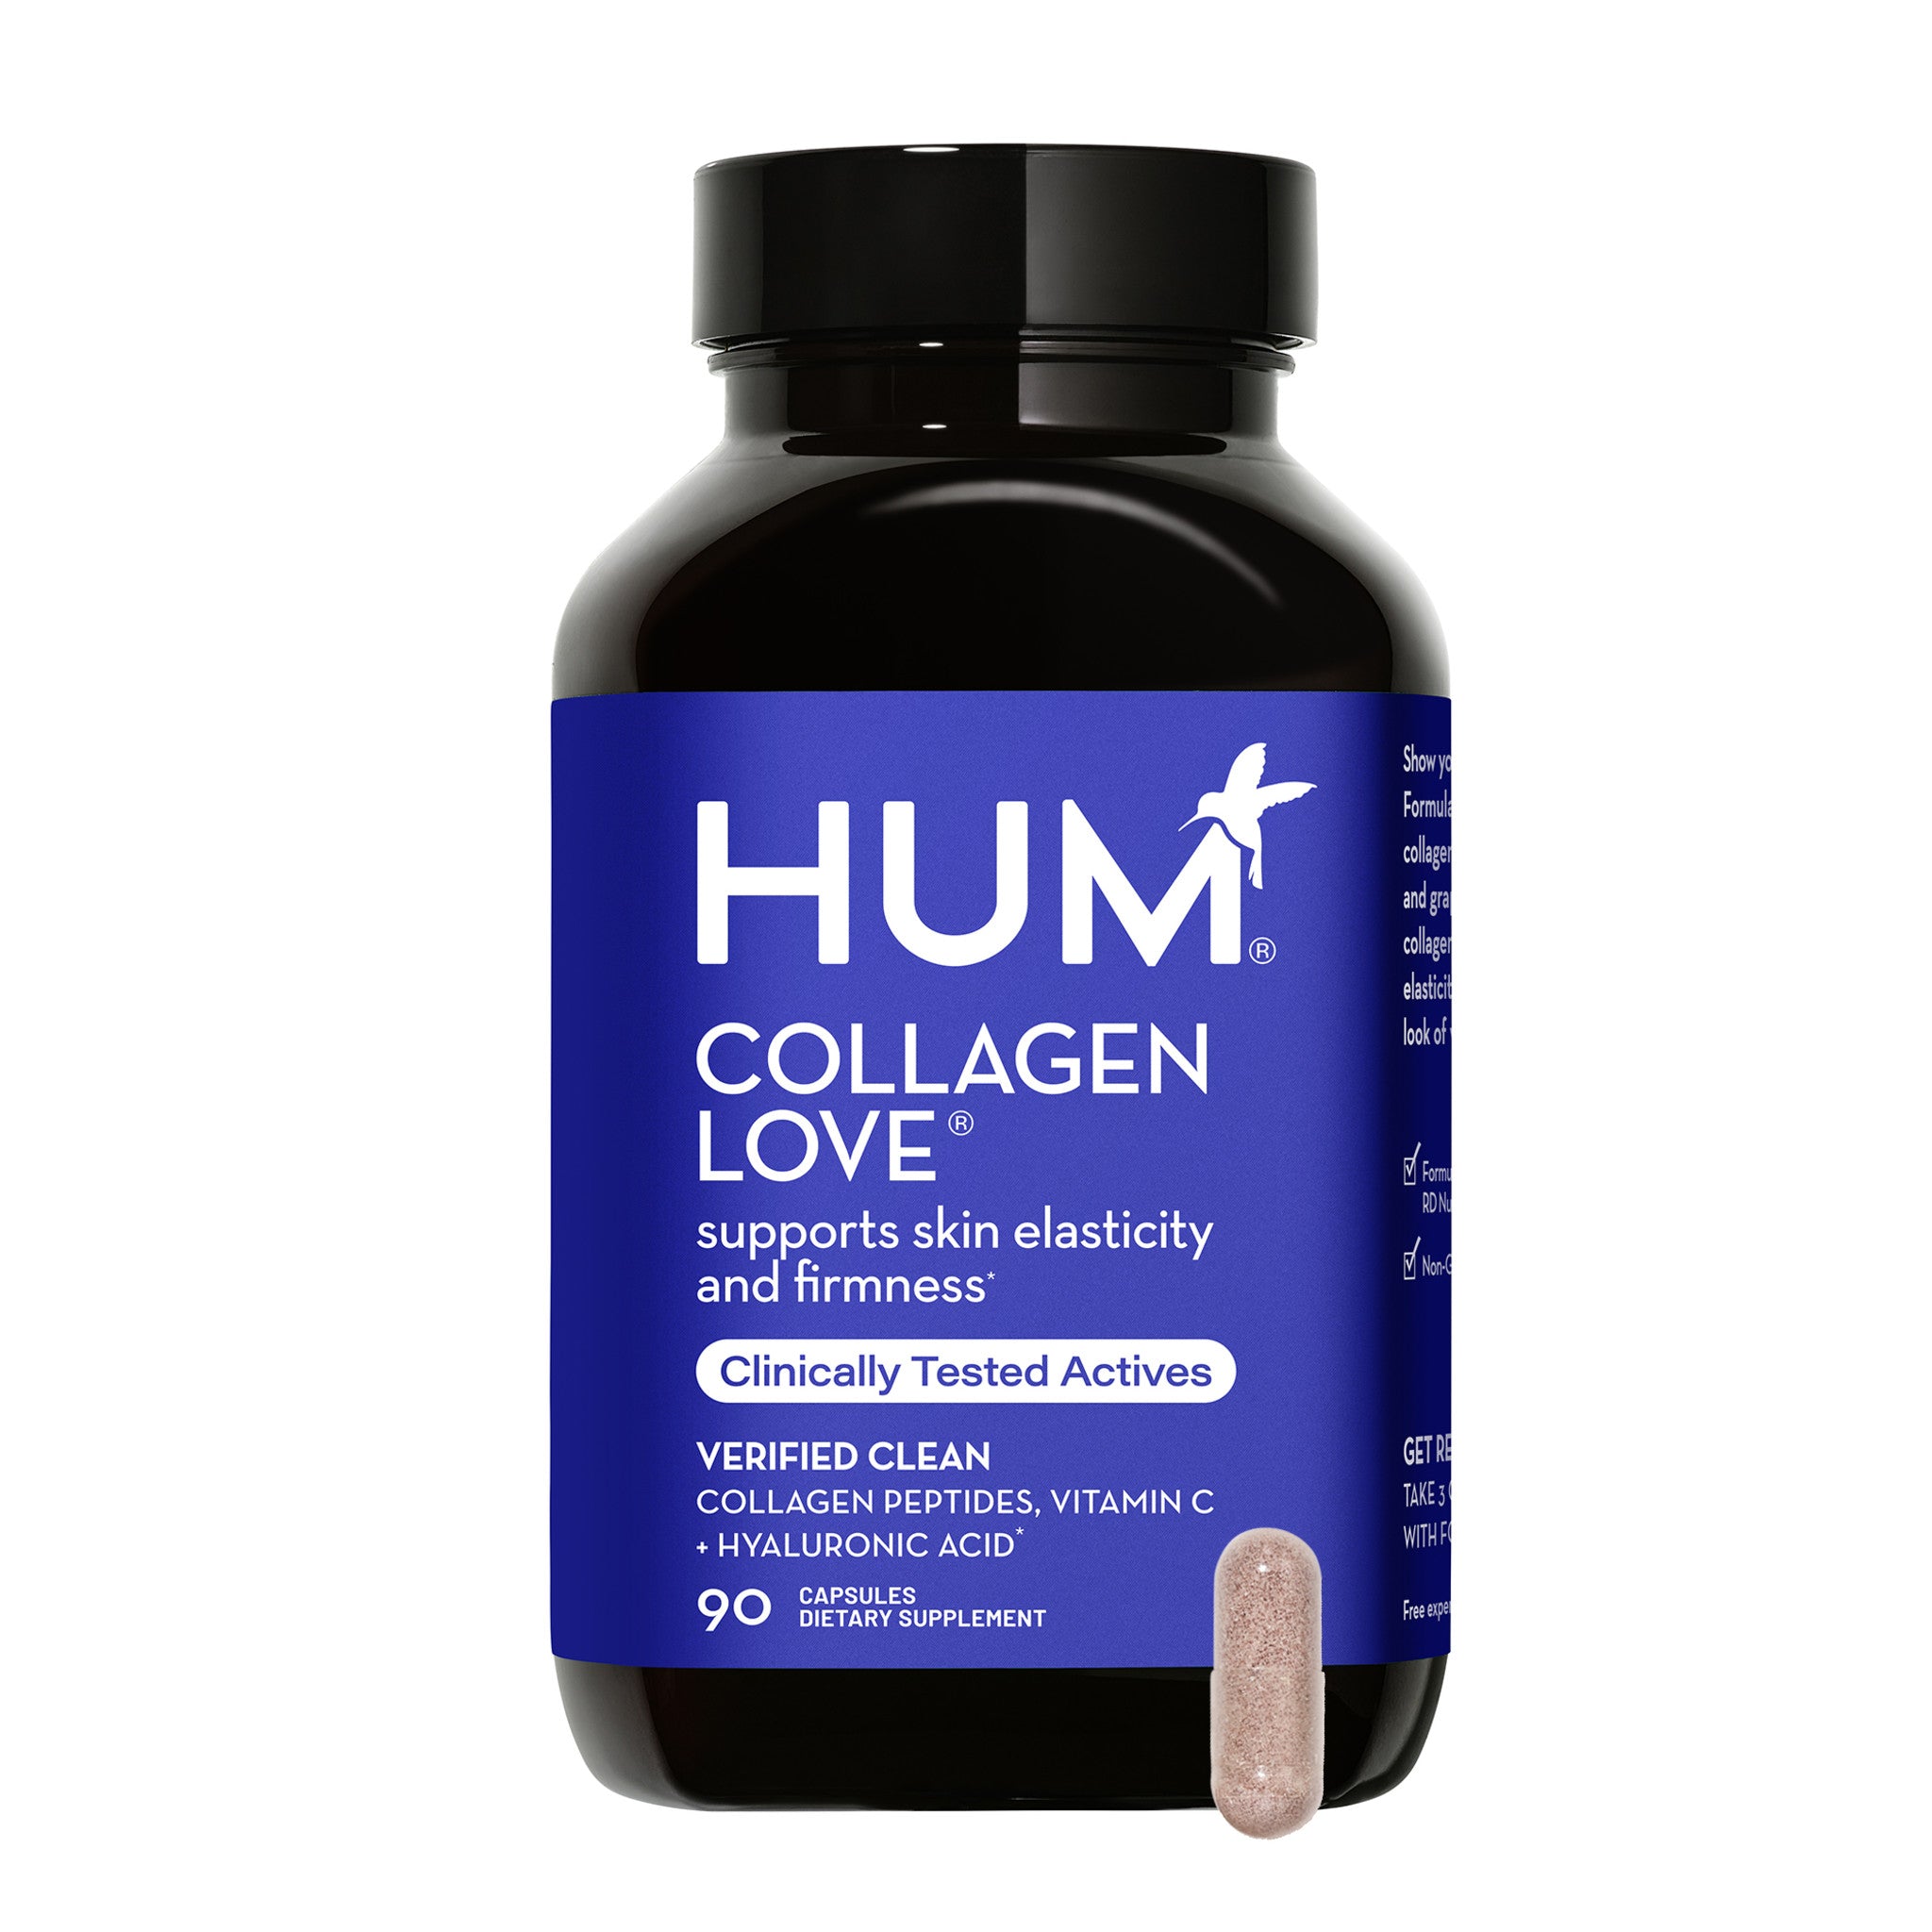 Hum Collagen Love main image.